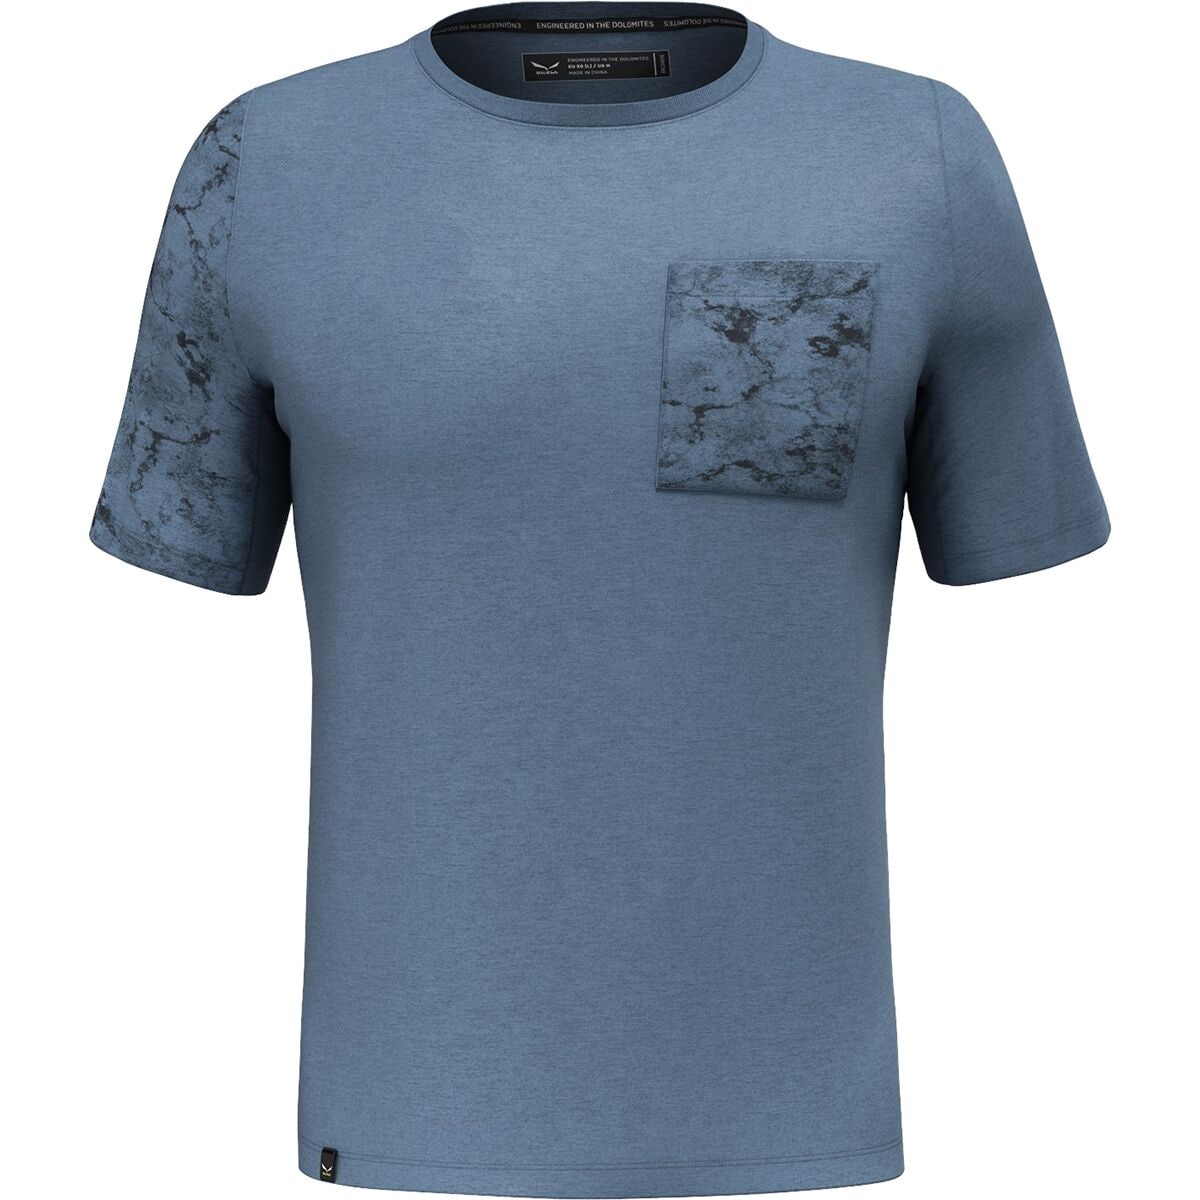 Lavaredo Hemp Pocket T-Shirt - Men